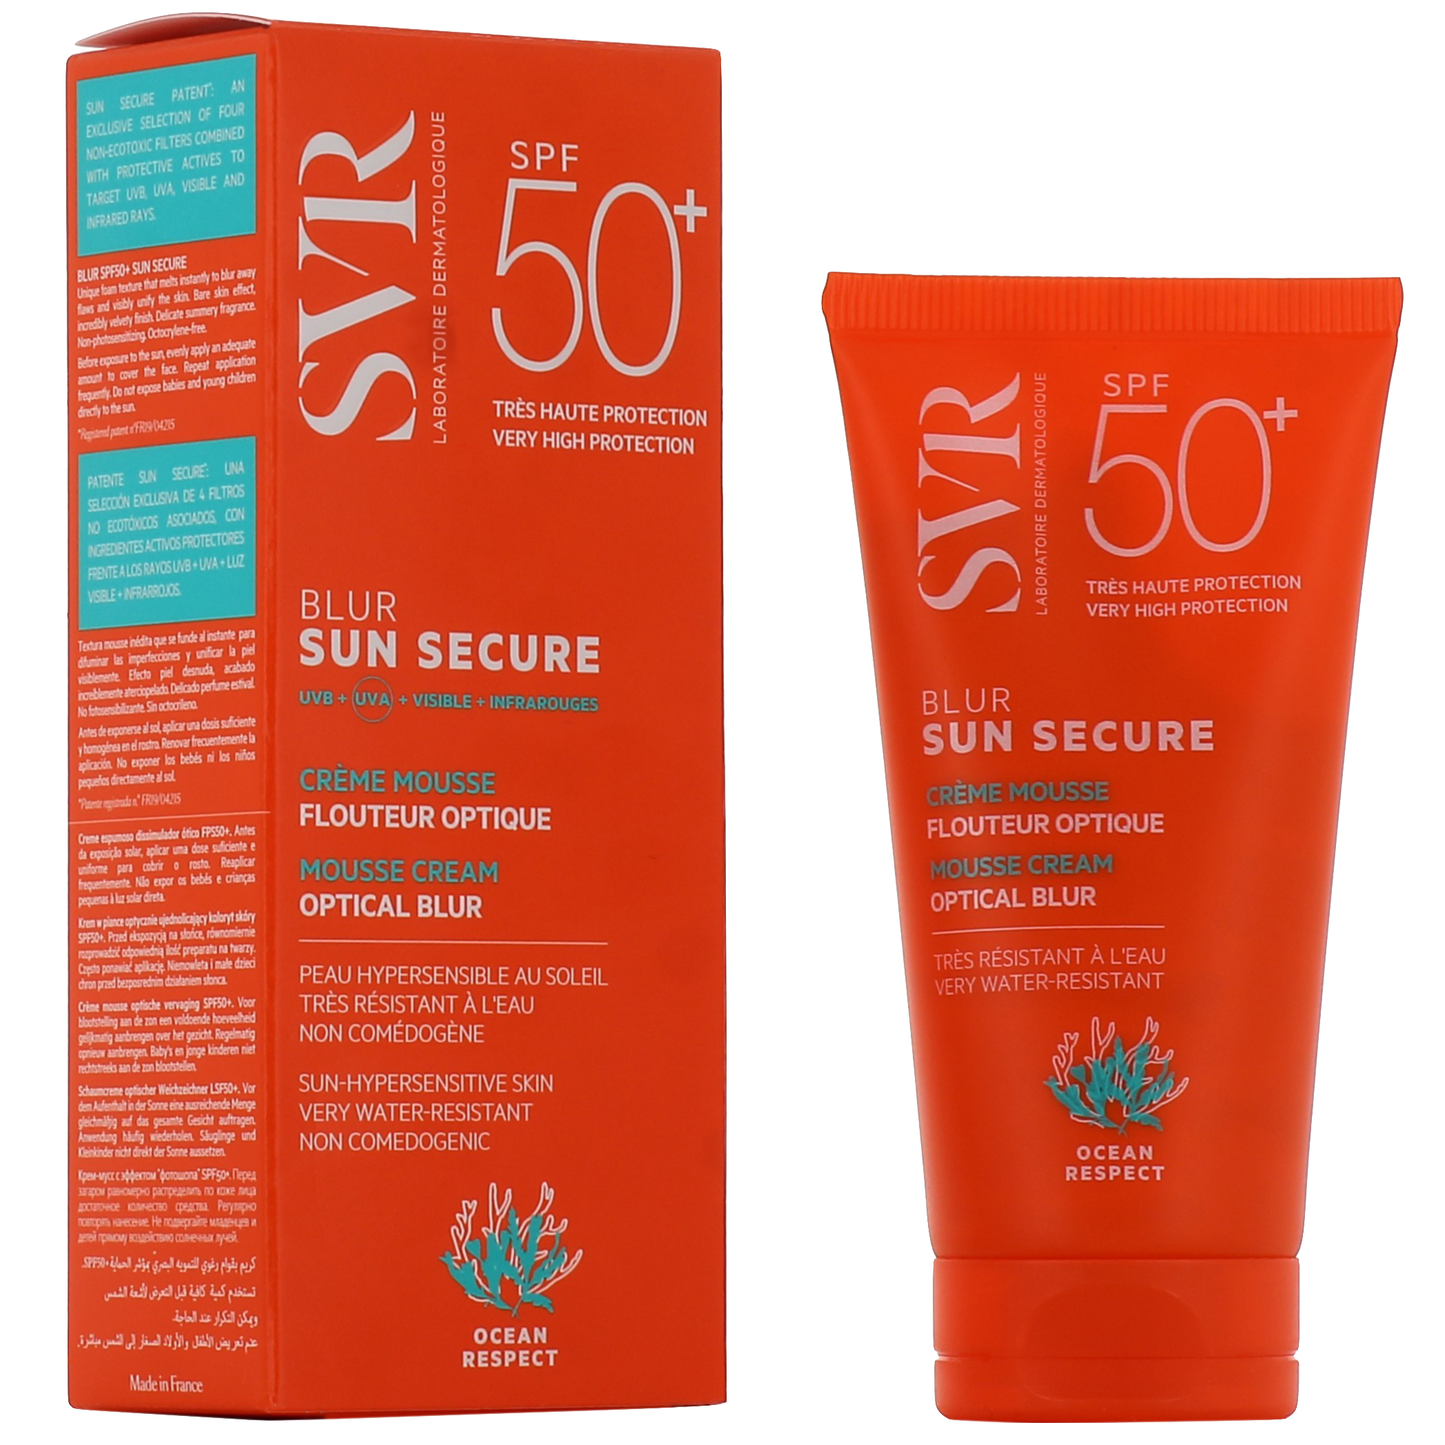 SVR Sun secure blur SPF50